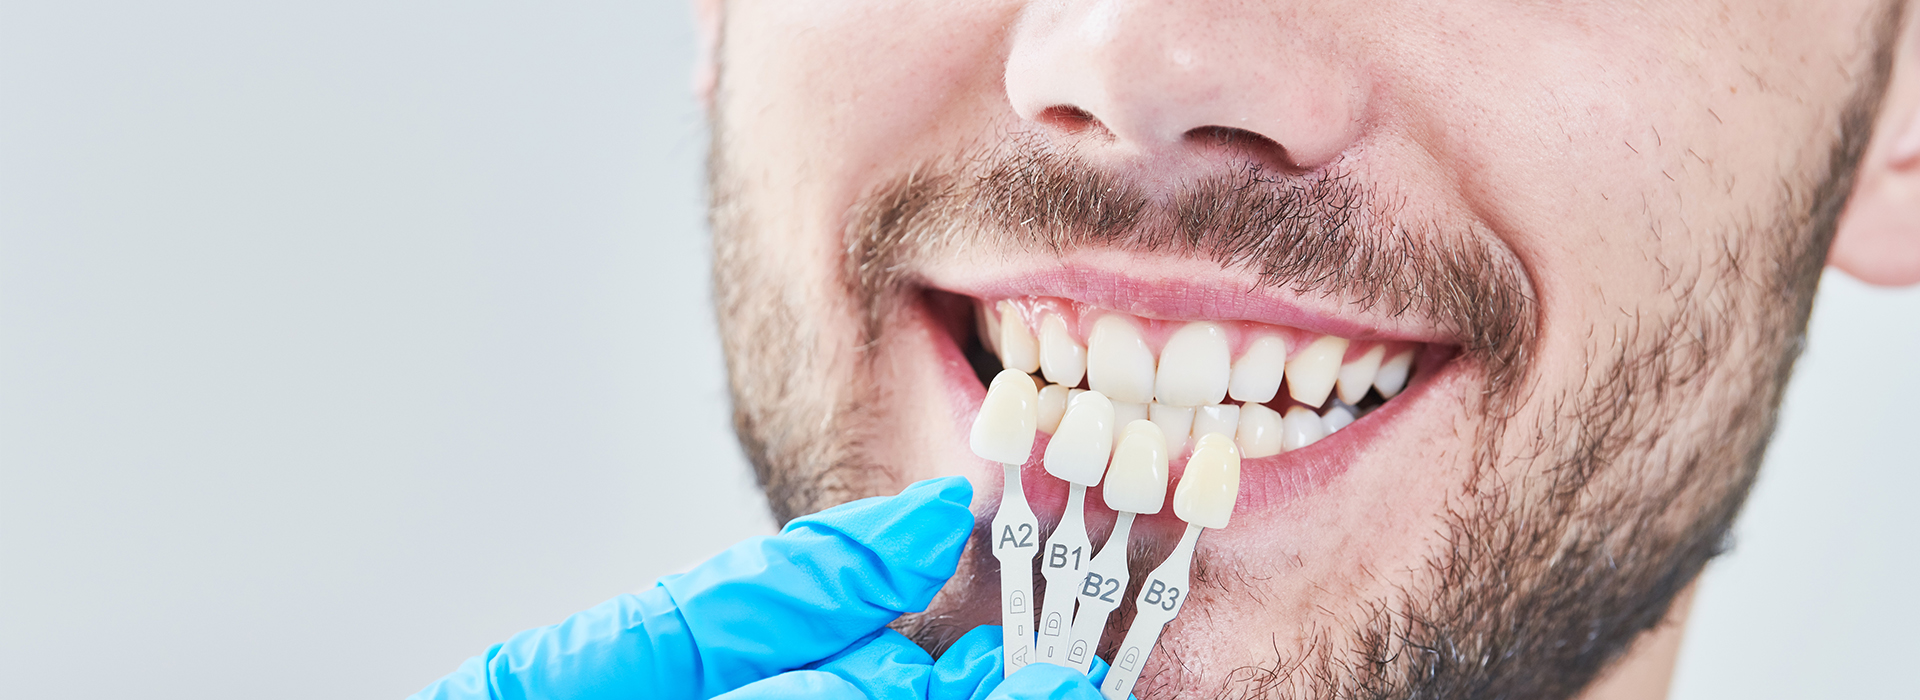 HP Dental | Dentures, Teeth Whitening and Air Abrasion